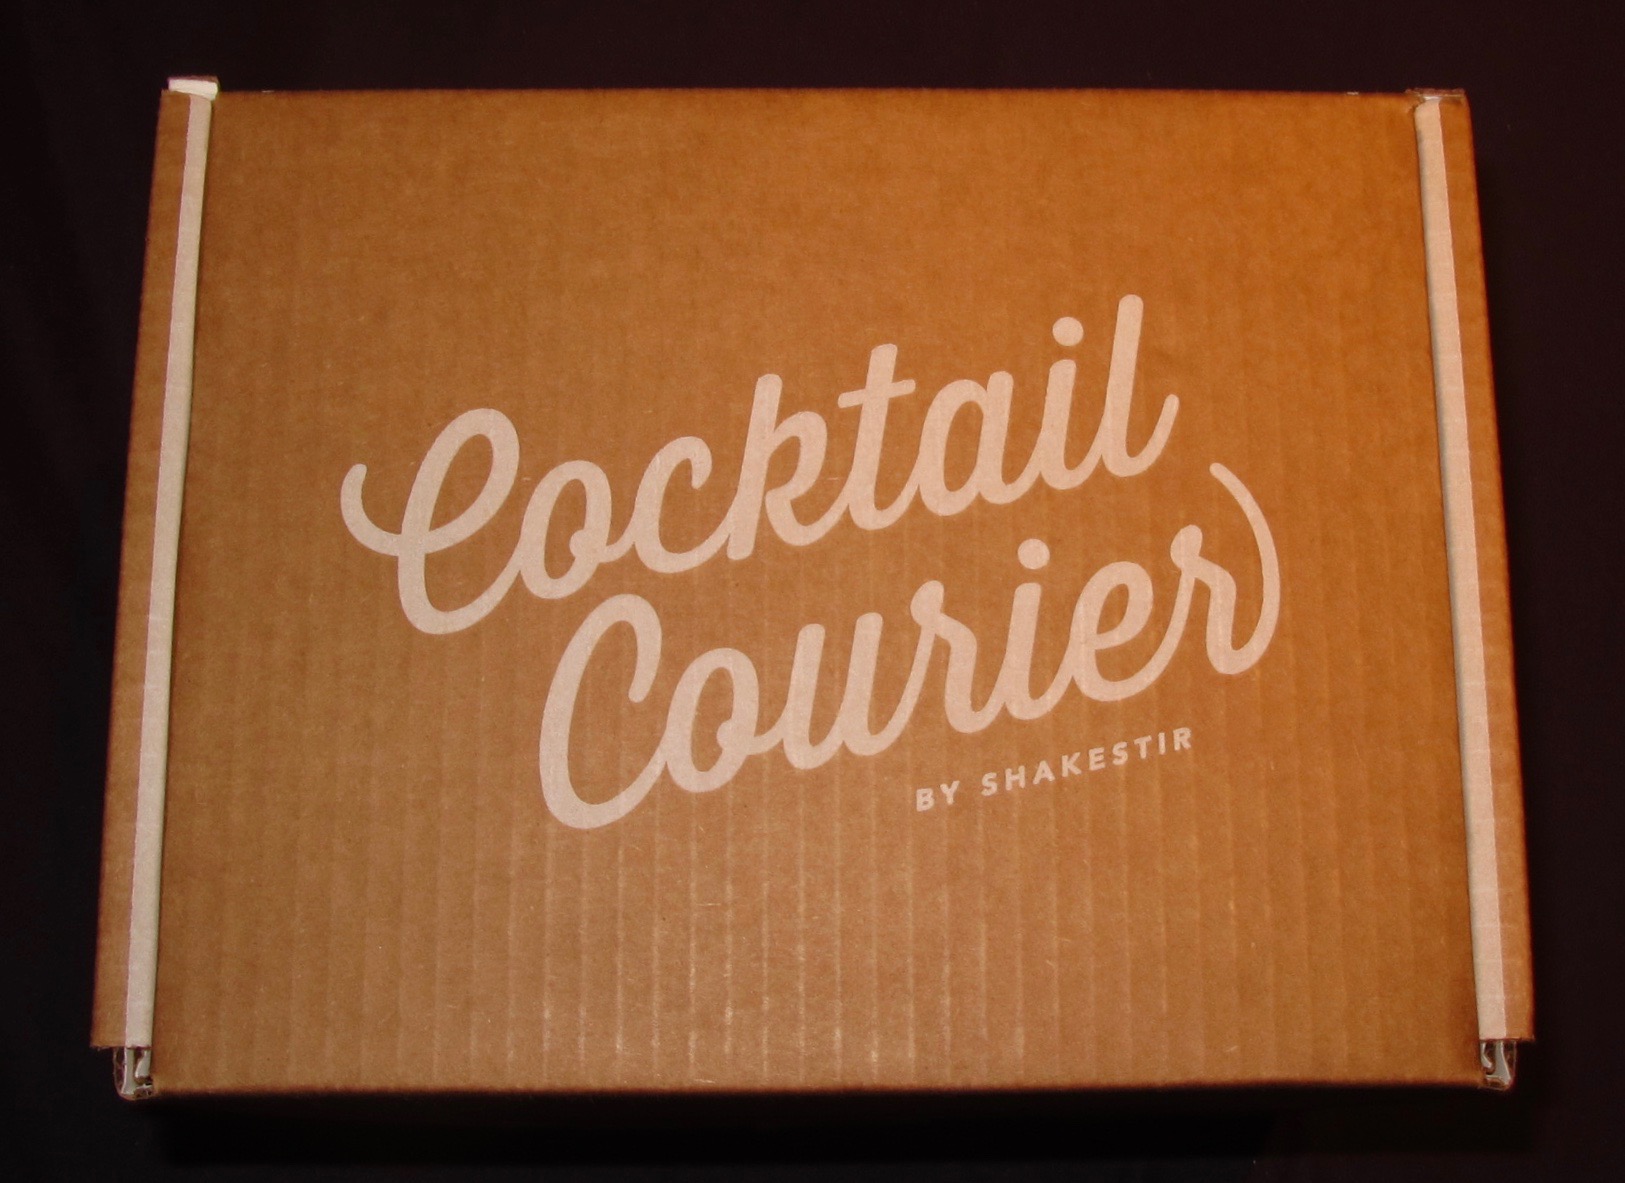 cocktailcourierbox